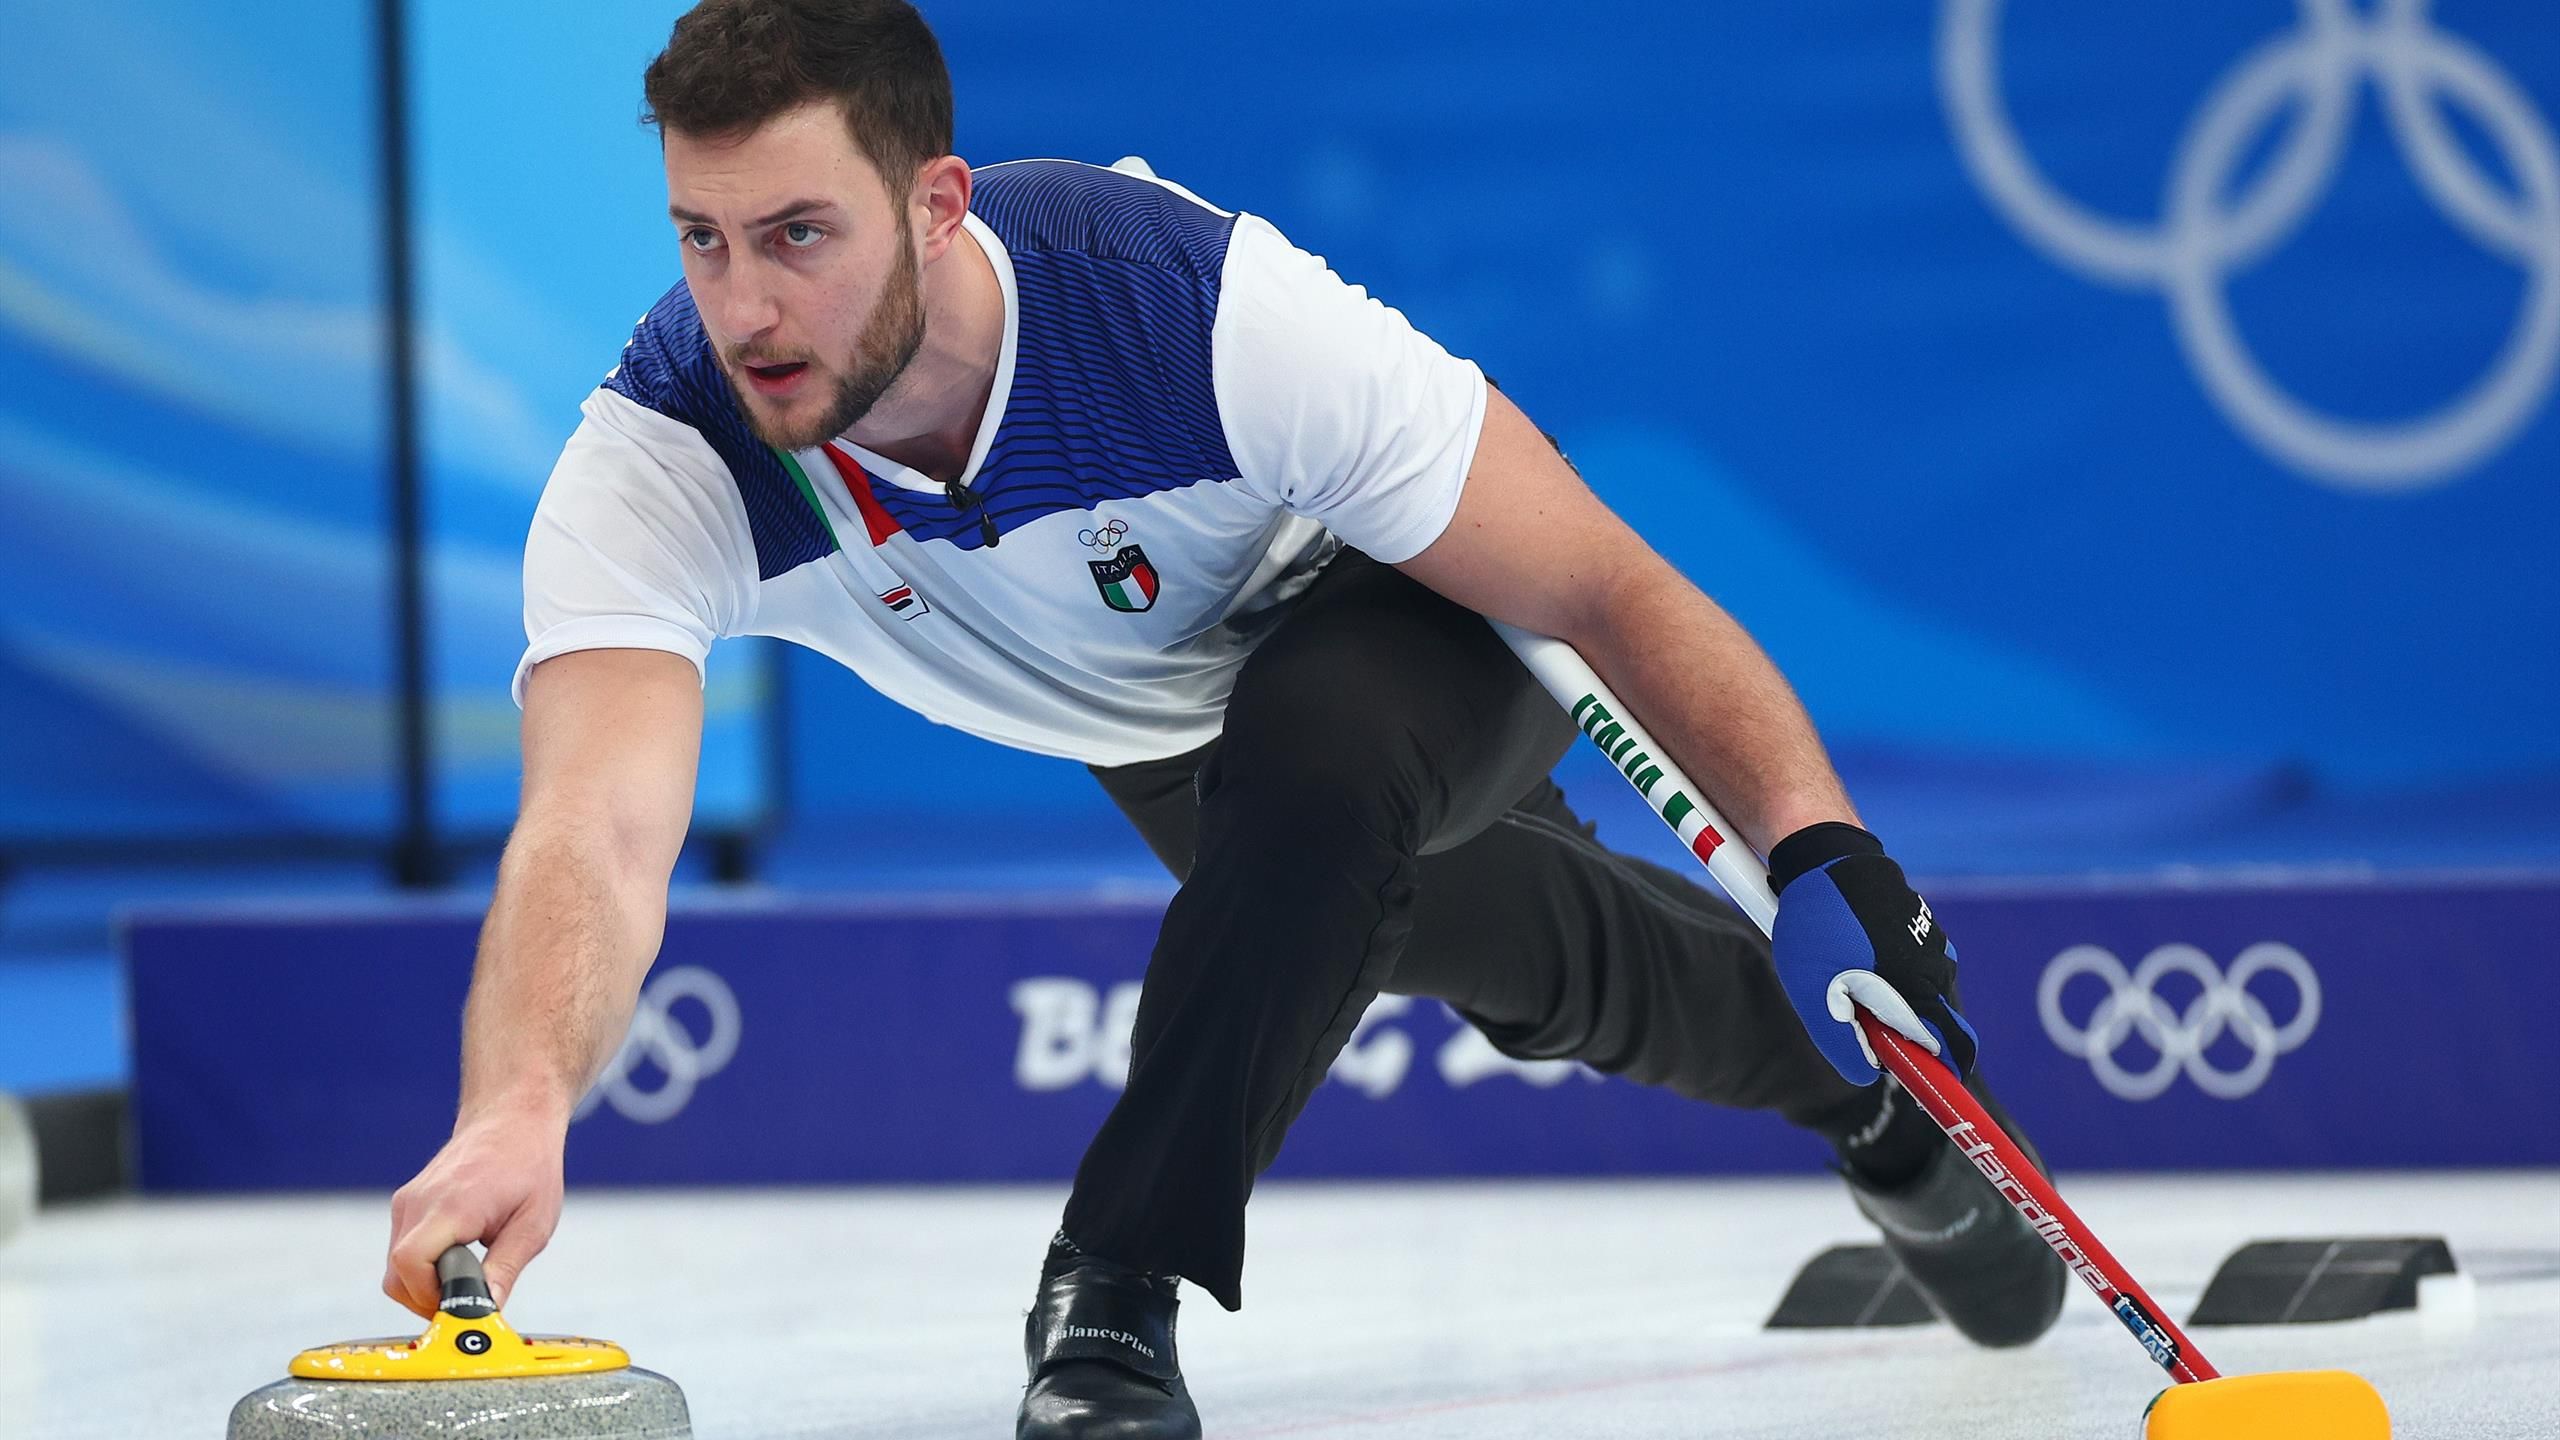 curling winter olympics 2022 live